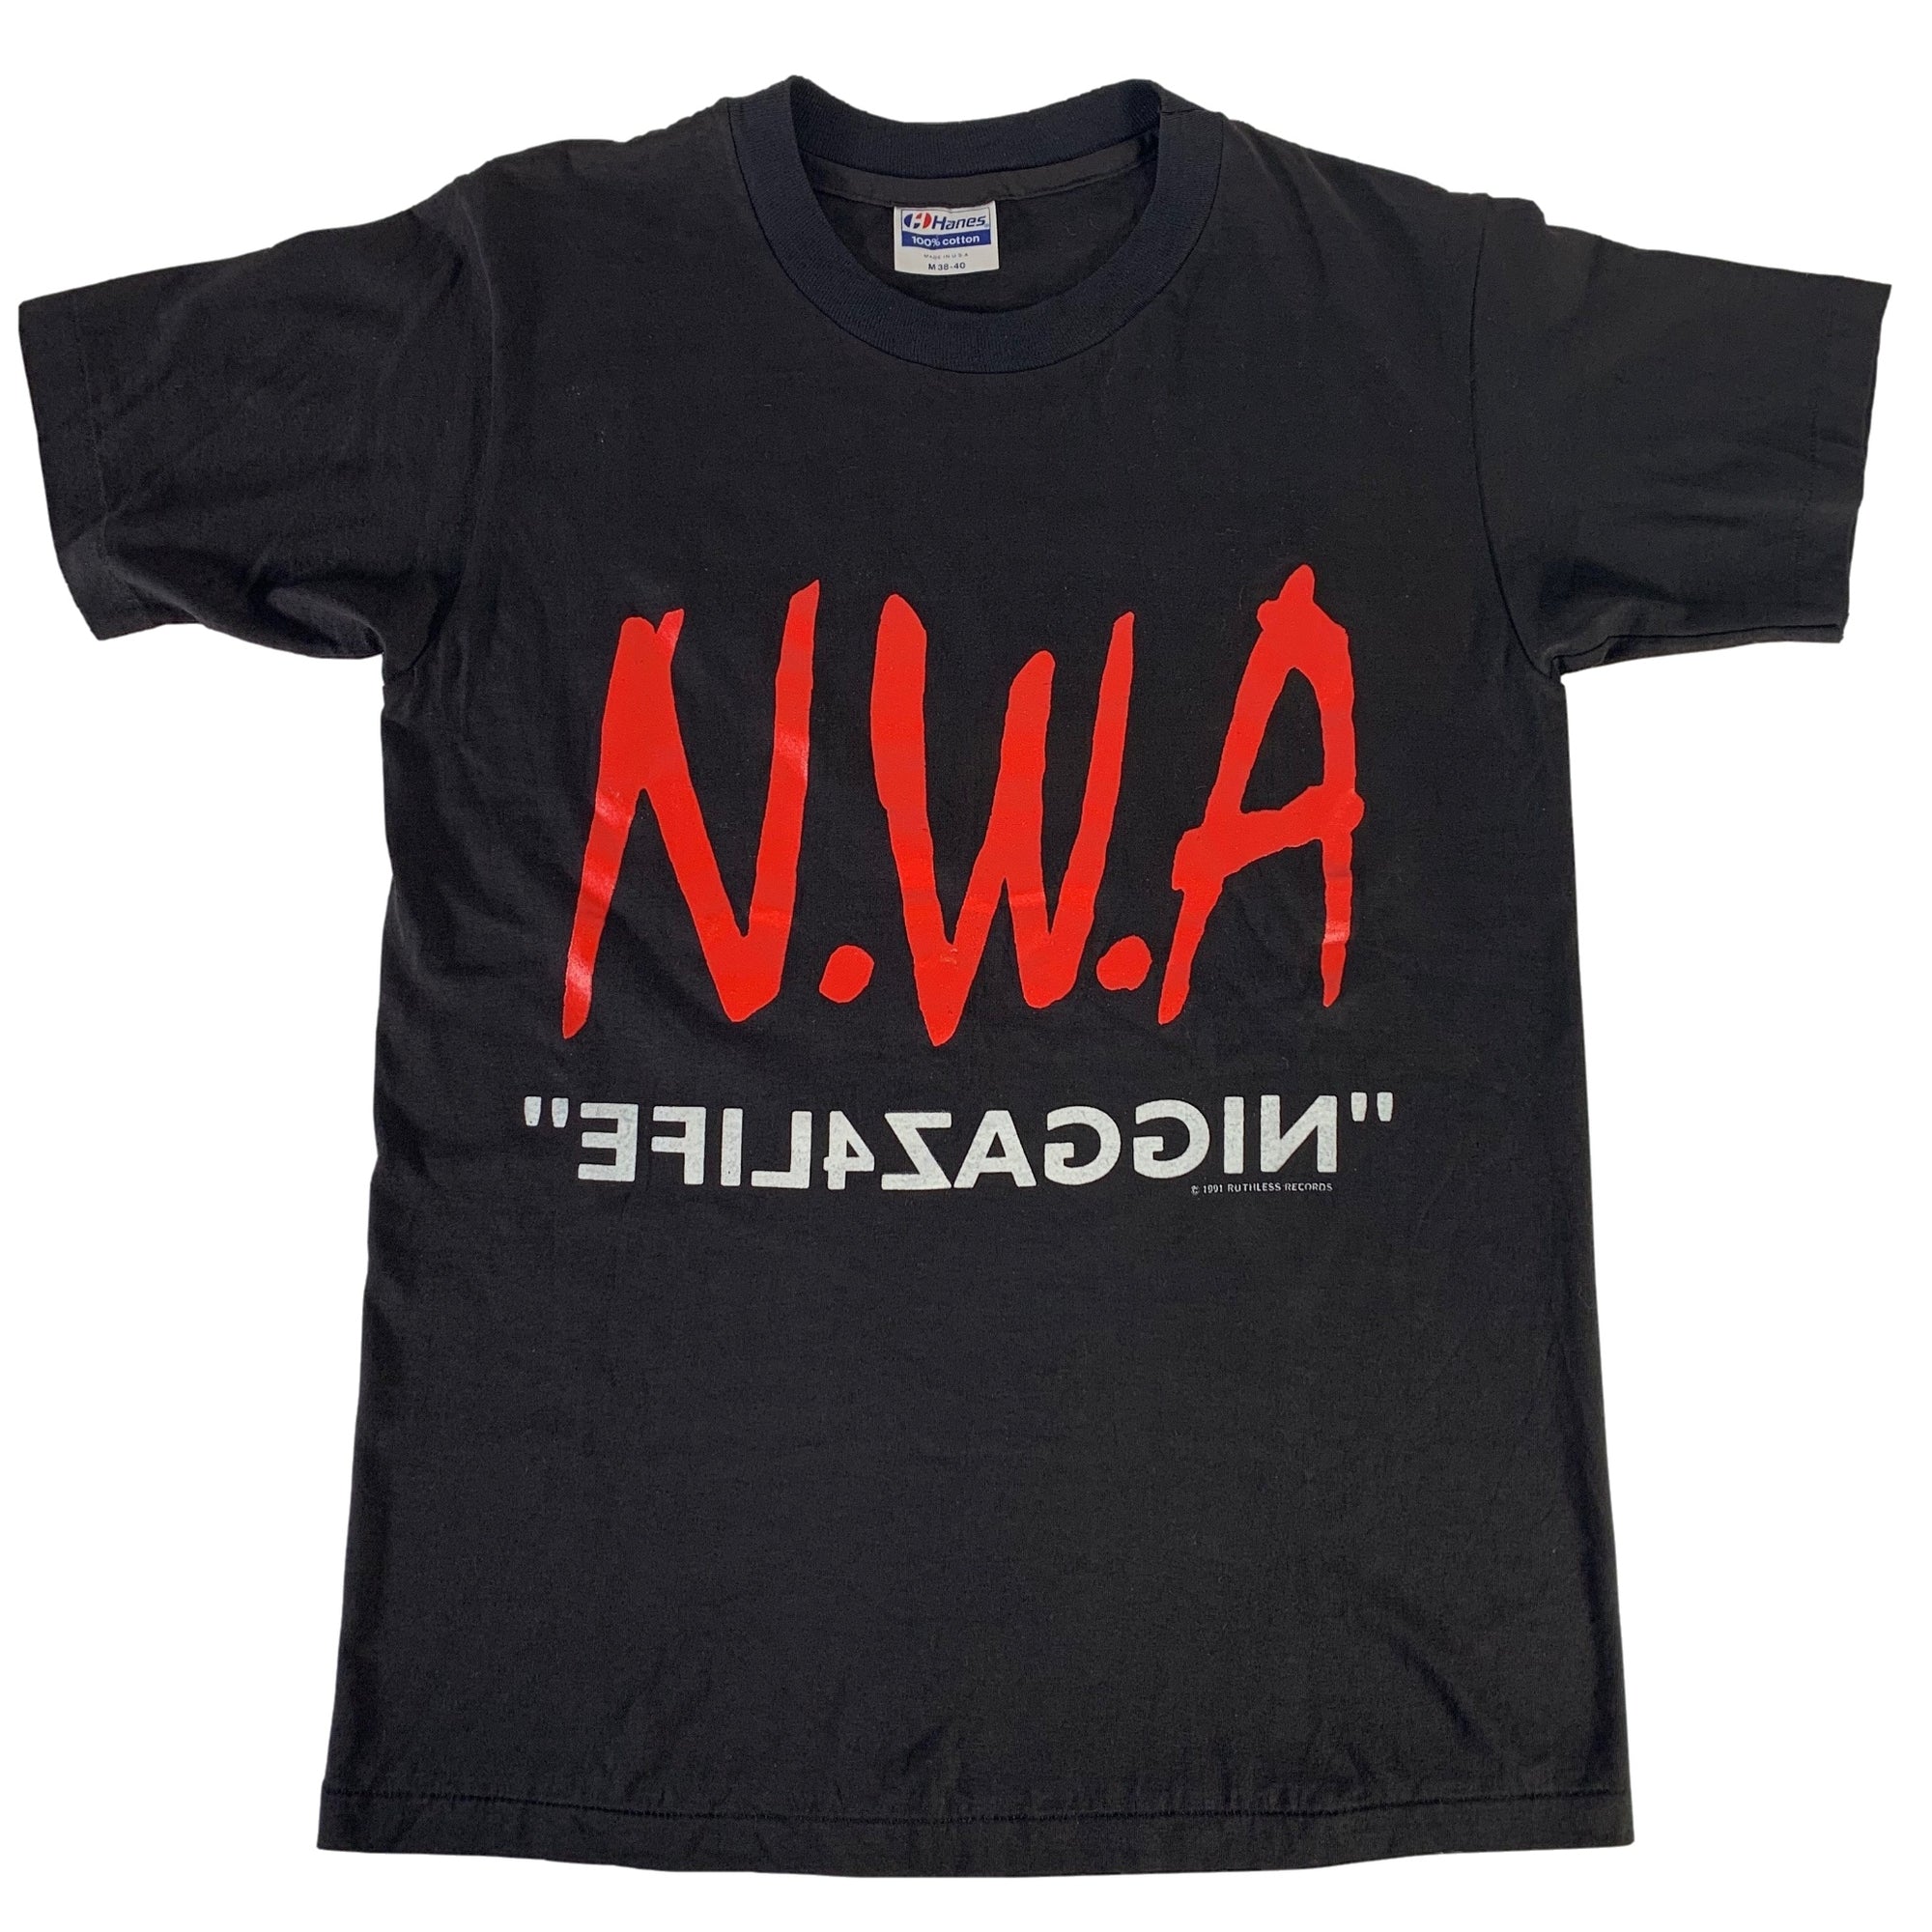 Vintage NWA "Ruthless Records 91'" T-Shirt - jointcustodydc